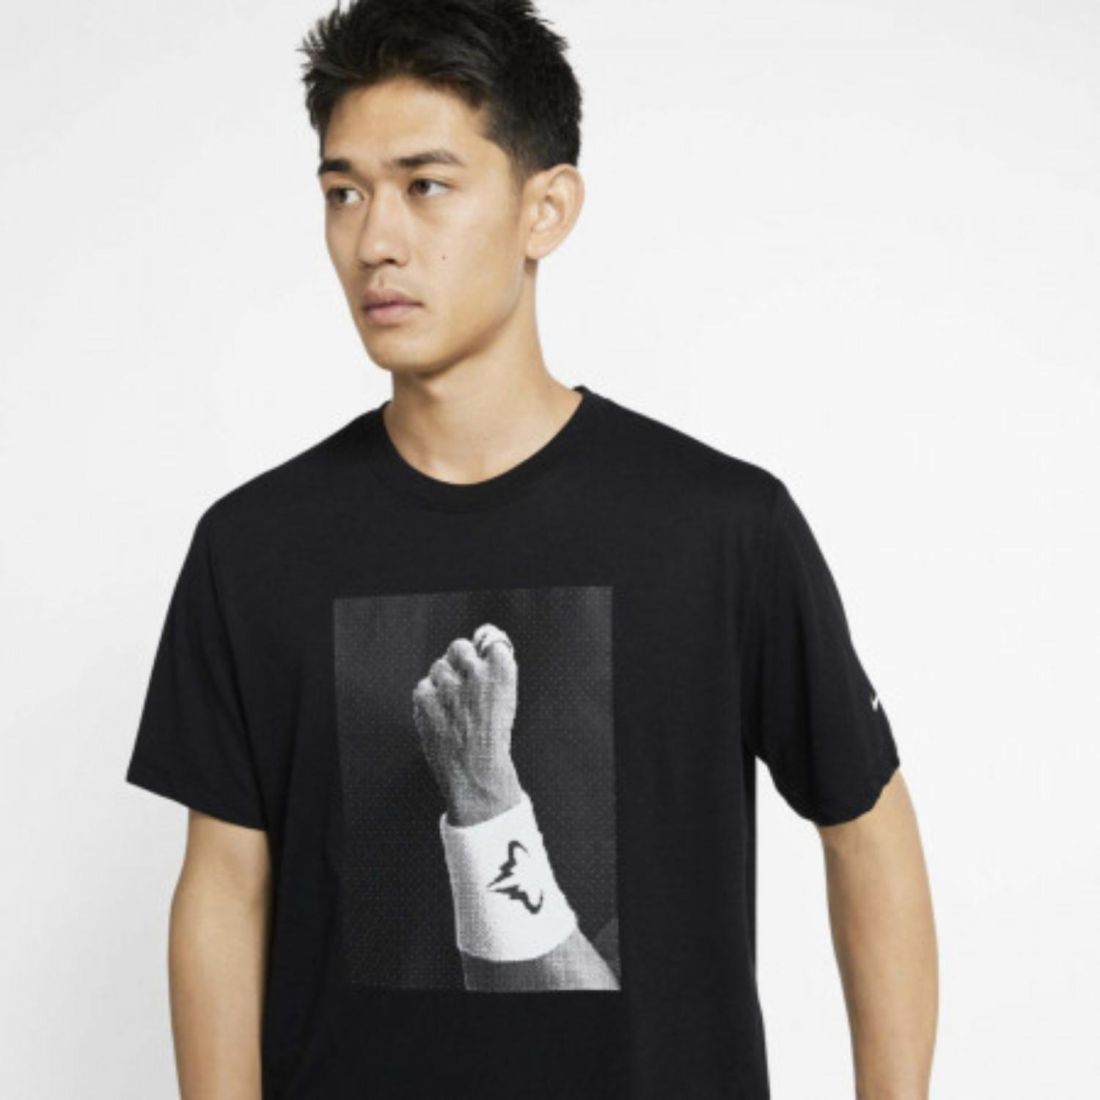 Стильная мужская футболка Nike Rafa M Nkct Dry Tee Db Gfx